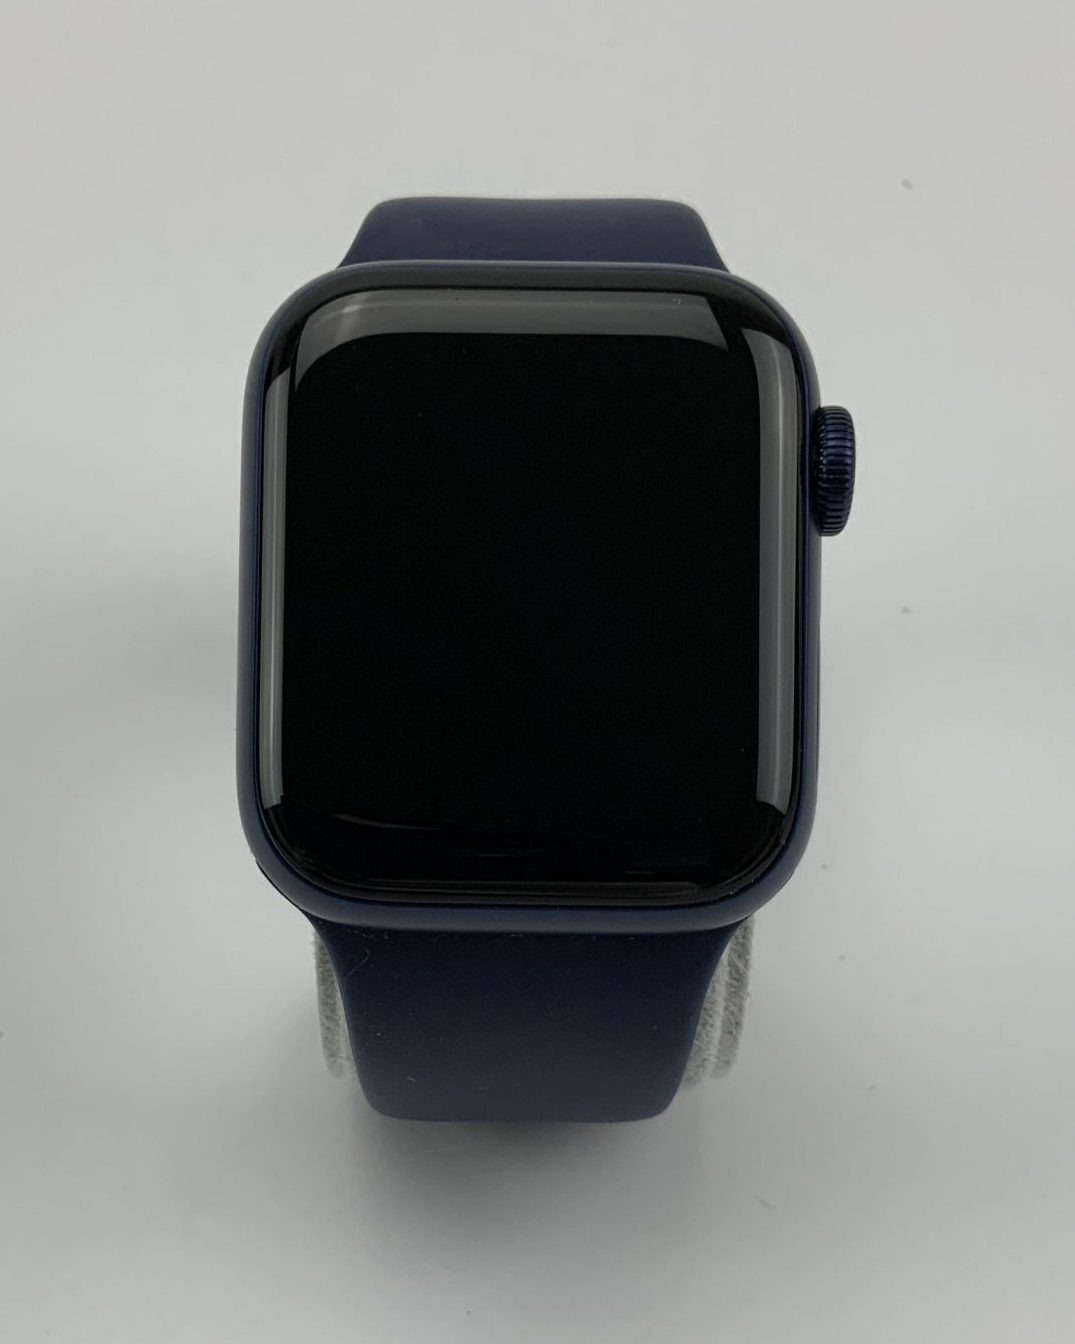 Watch Series 6 Aluminum Cellular (40mm), Blue, image 1